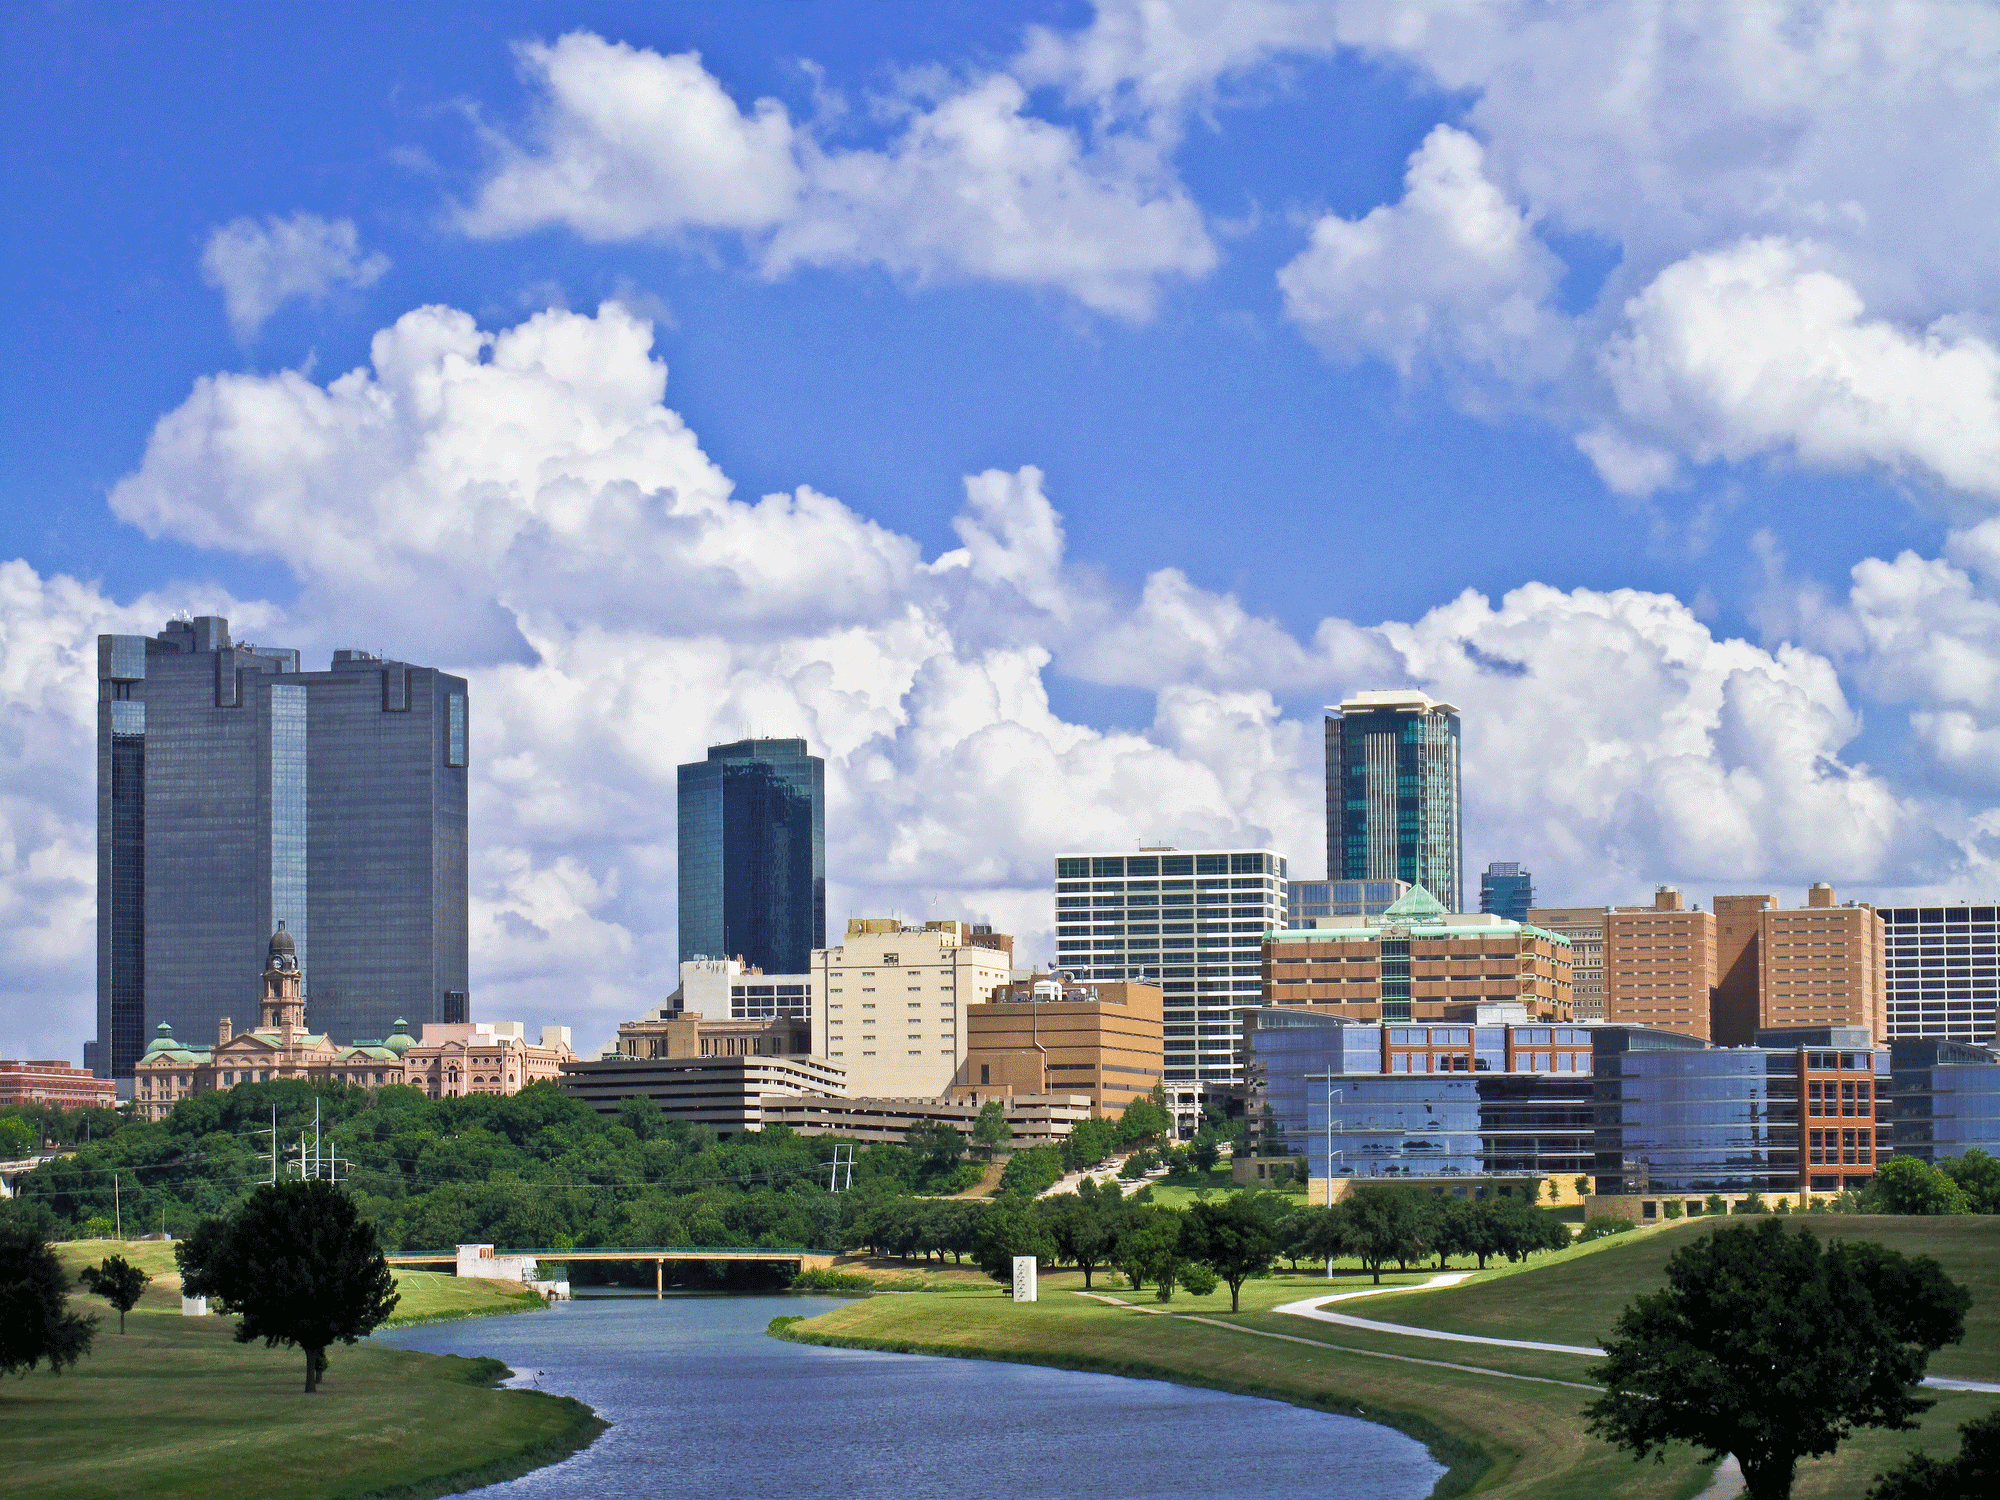 Fort Worth Texas Skyline